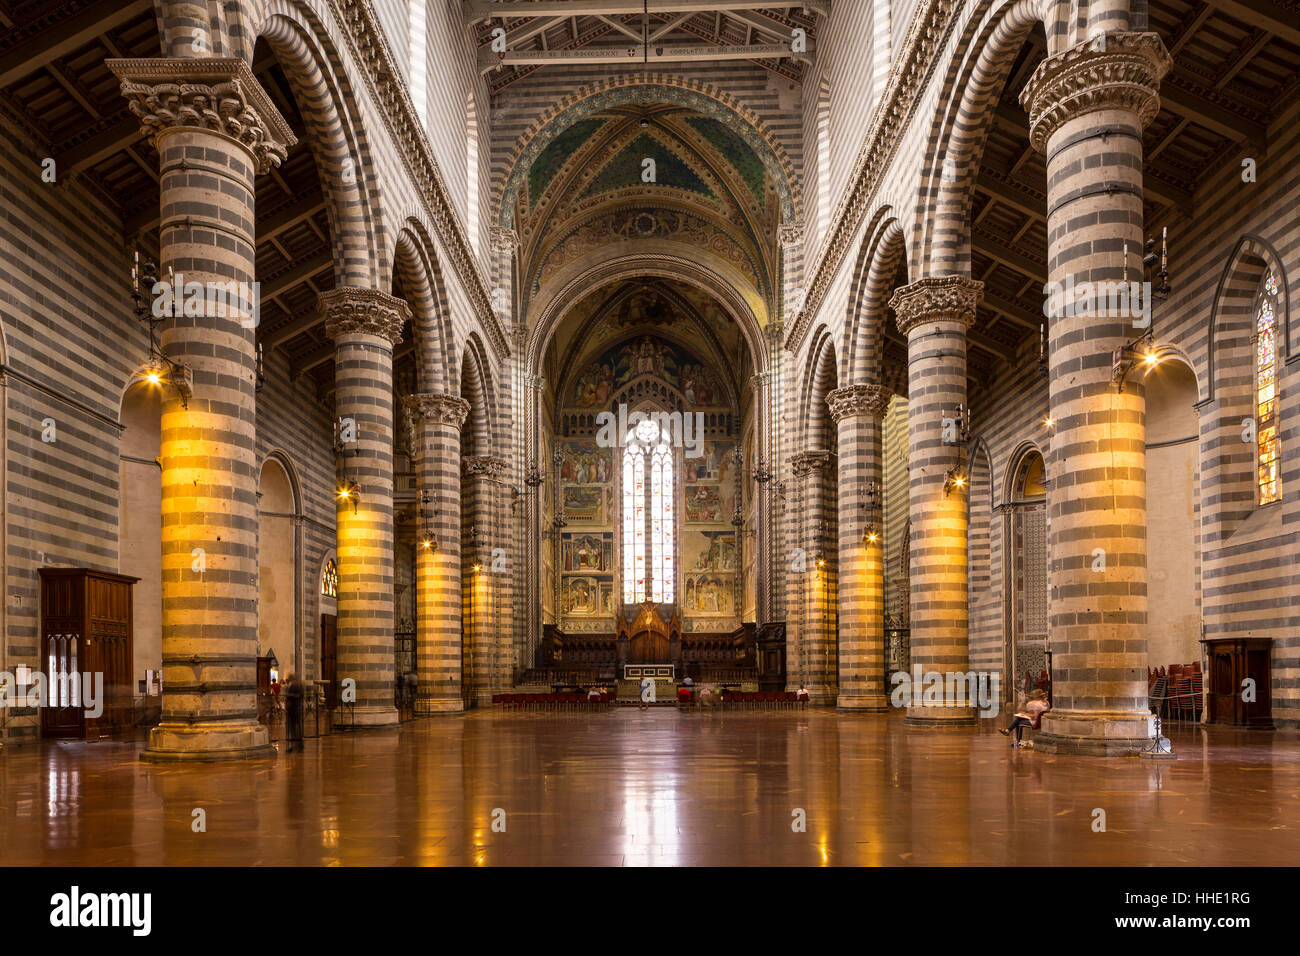 Le Duomo di Orvieto, Orvieto, Ombrie, Italie Banque D'Images